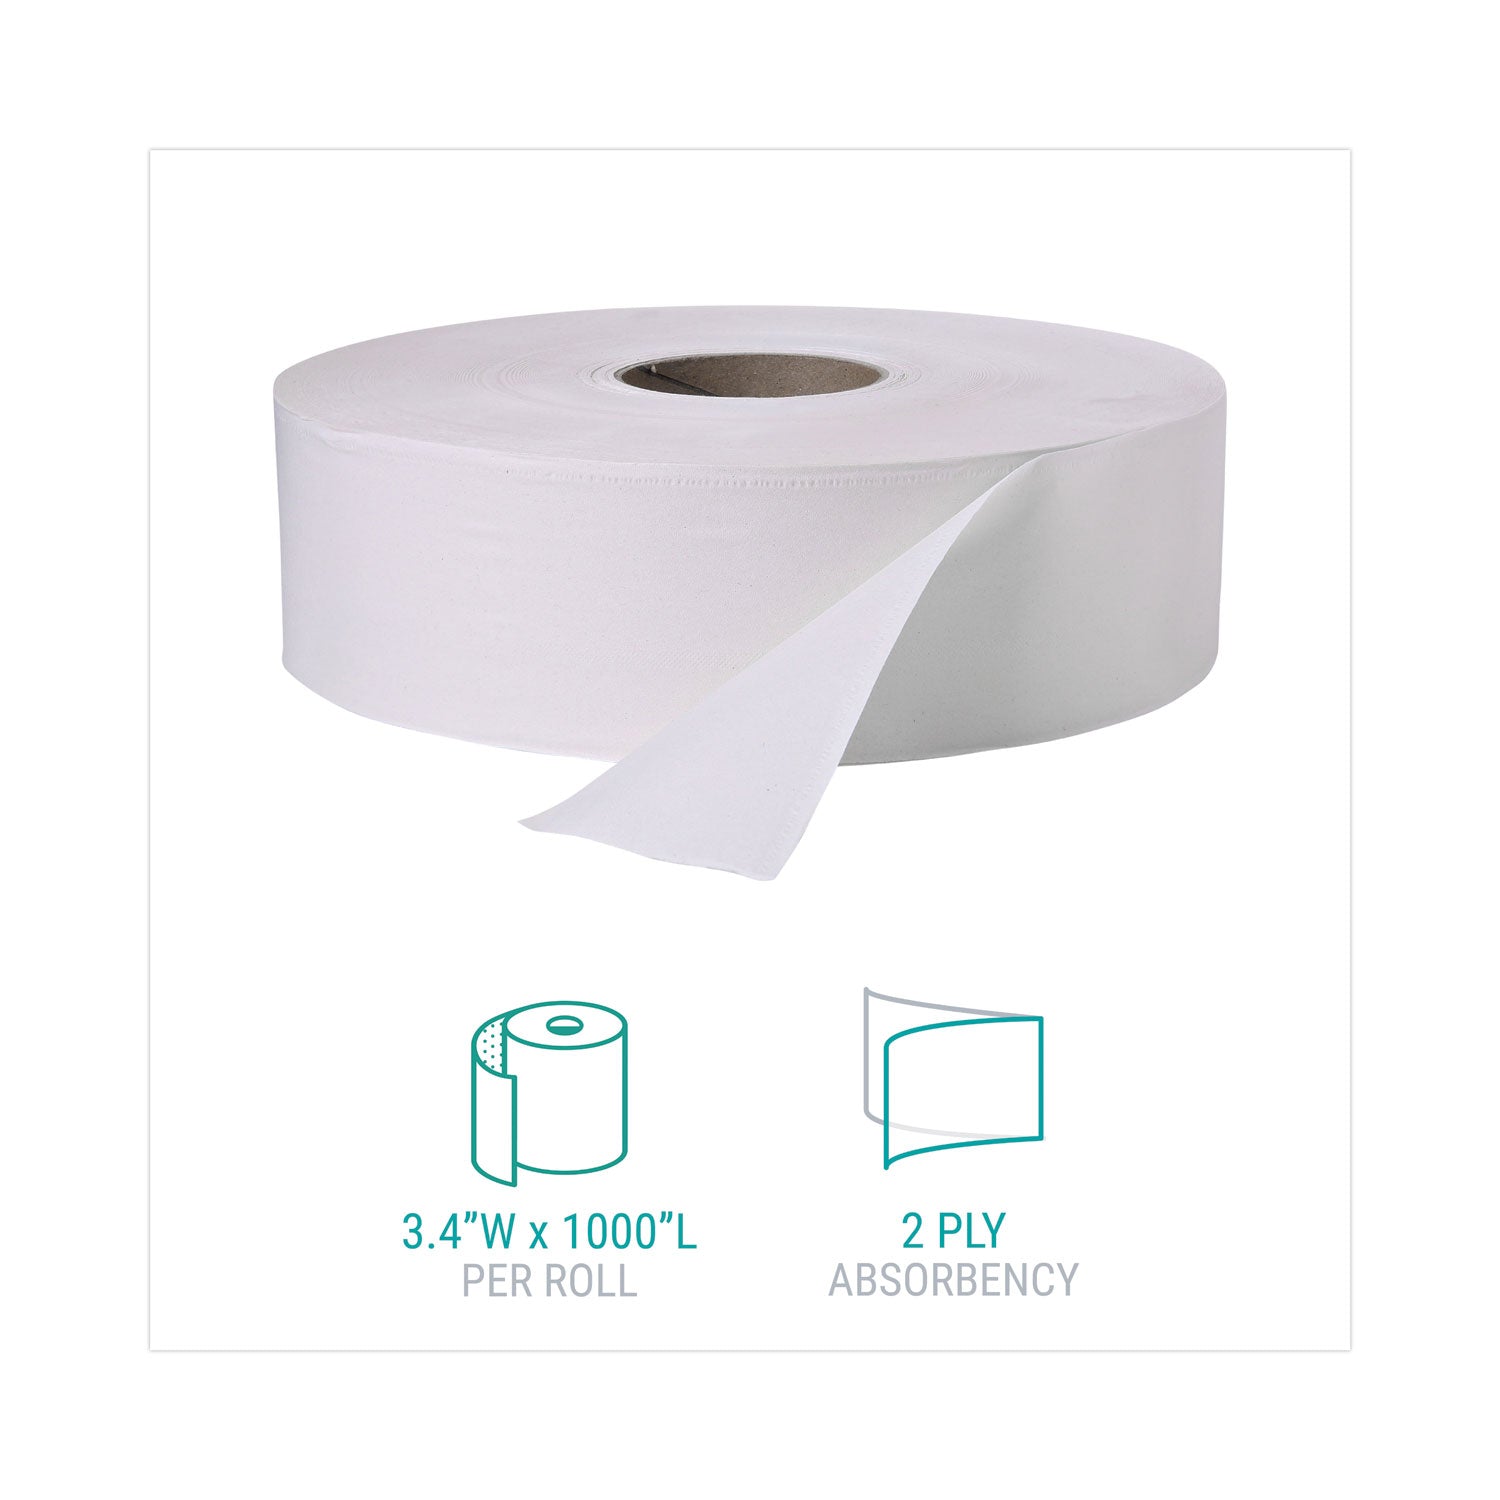 Jumbo Roll Bath Tissue, Septic Safe, 2 Ply, White, 3.4" x 1,000 ft, 12 Rolls/Carton - 